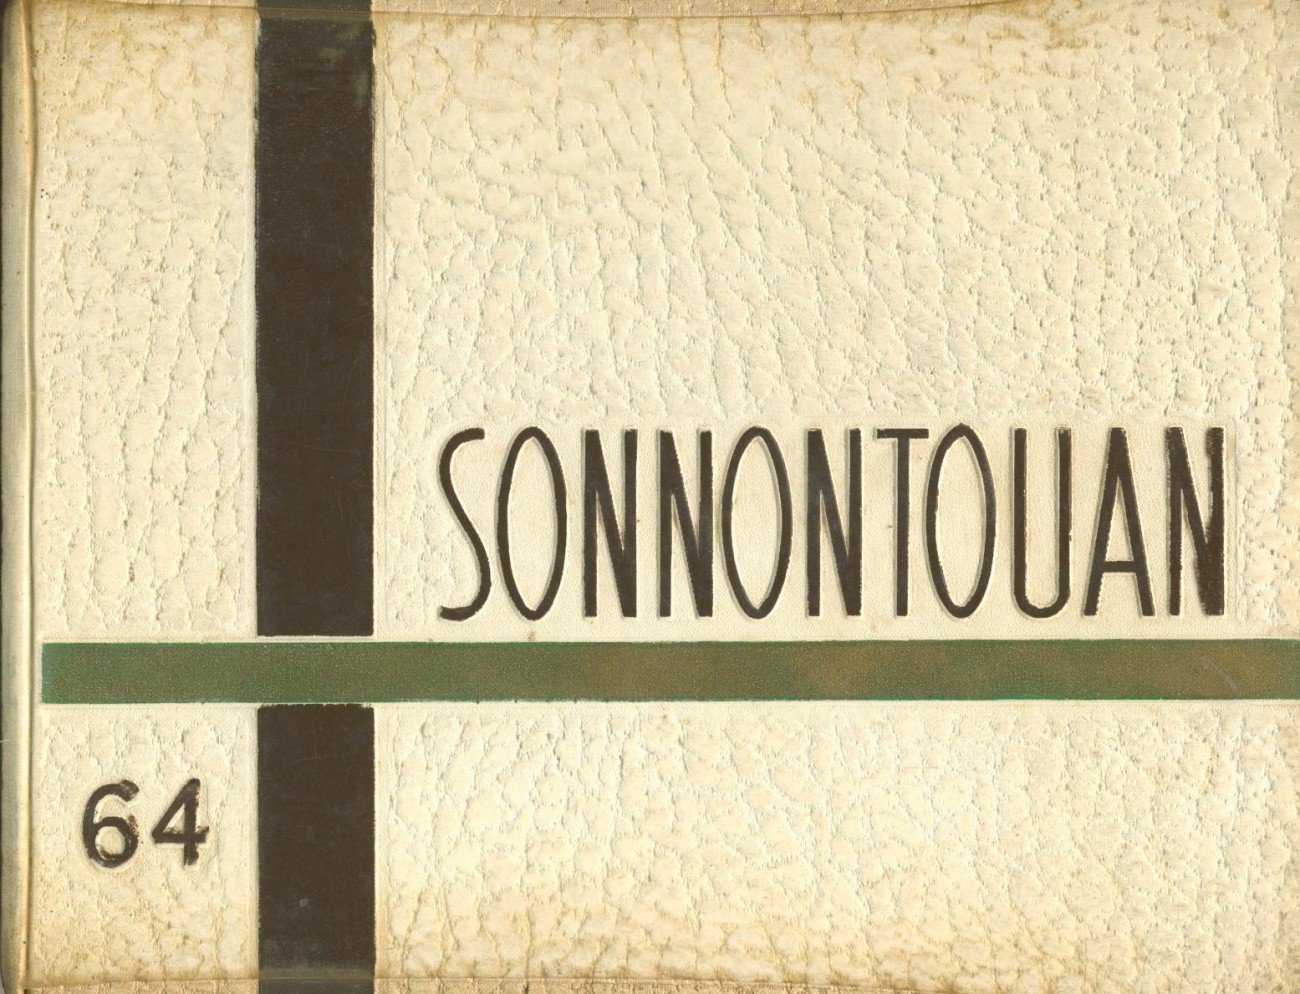 1964 Sonnontouan